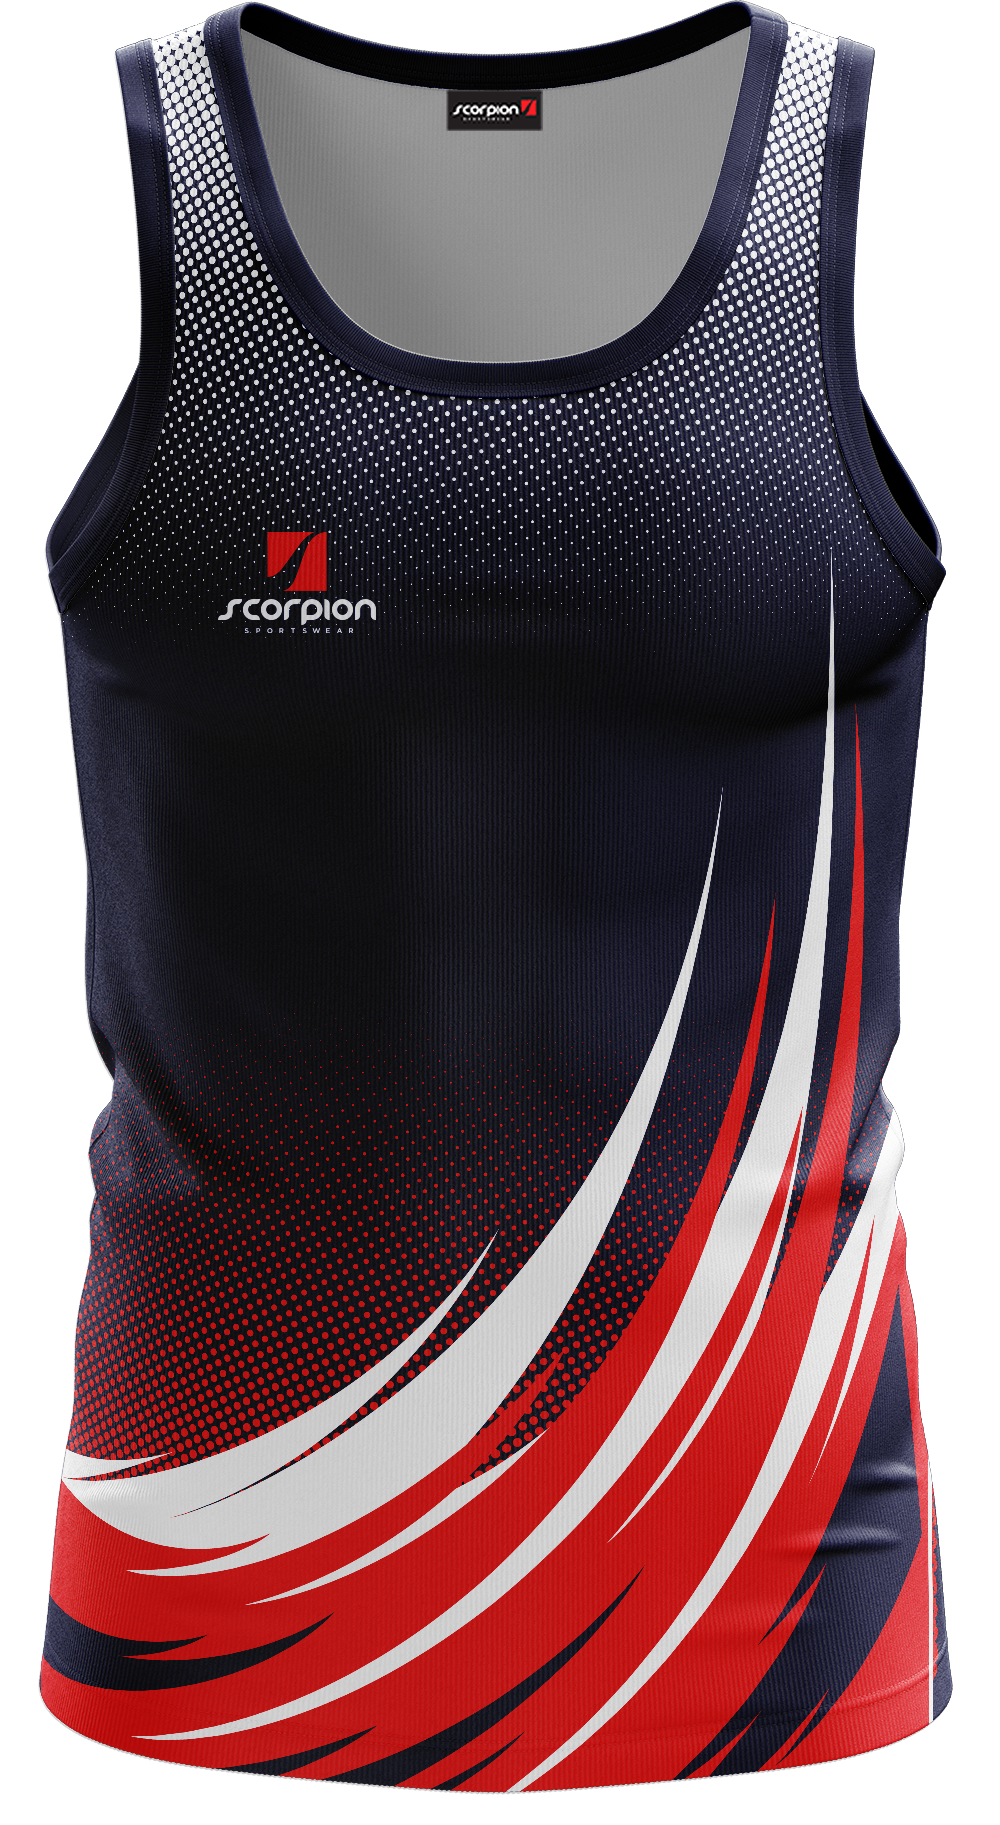 Scorpion Vests Pattern 5 - Navy/Red/White